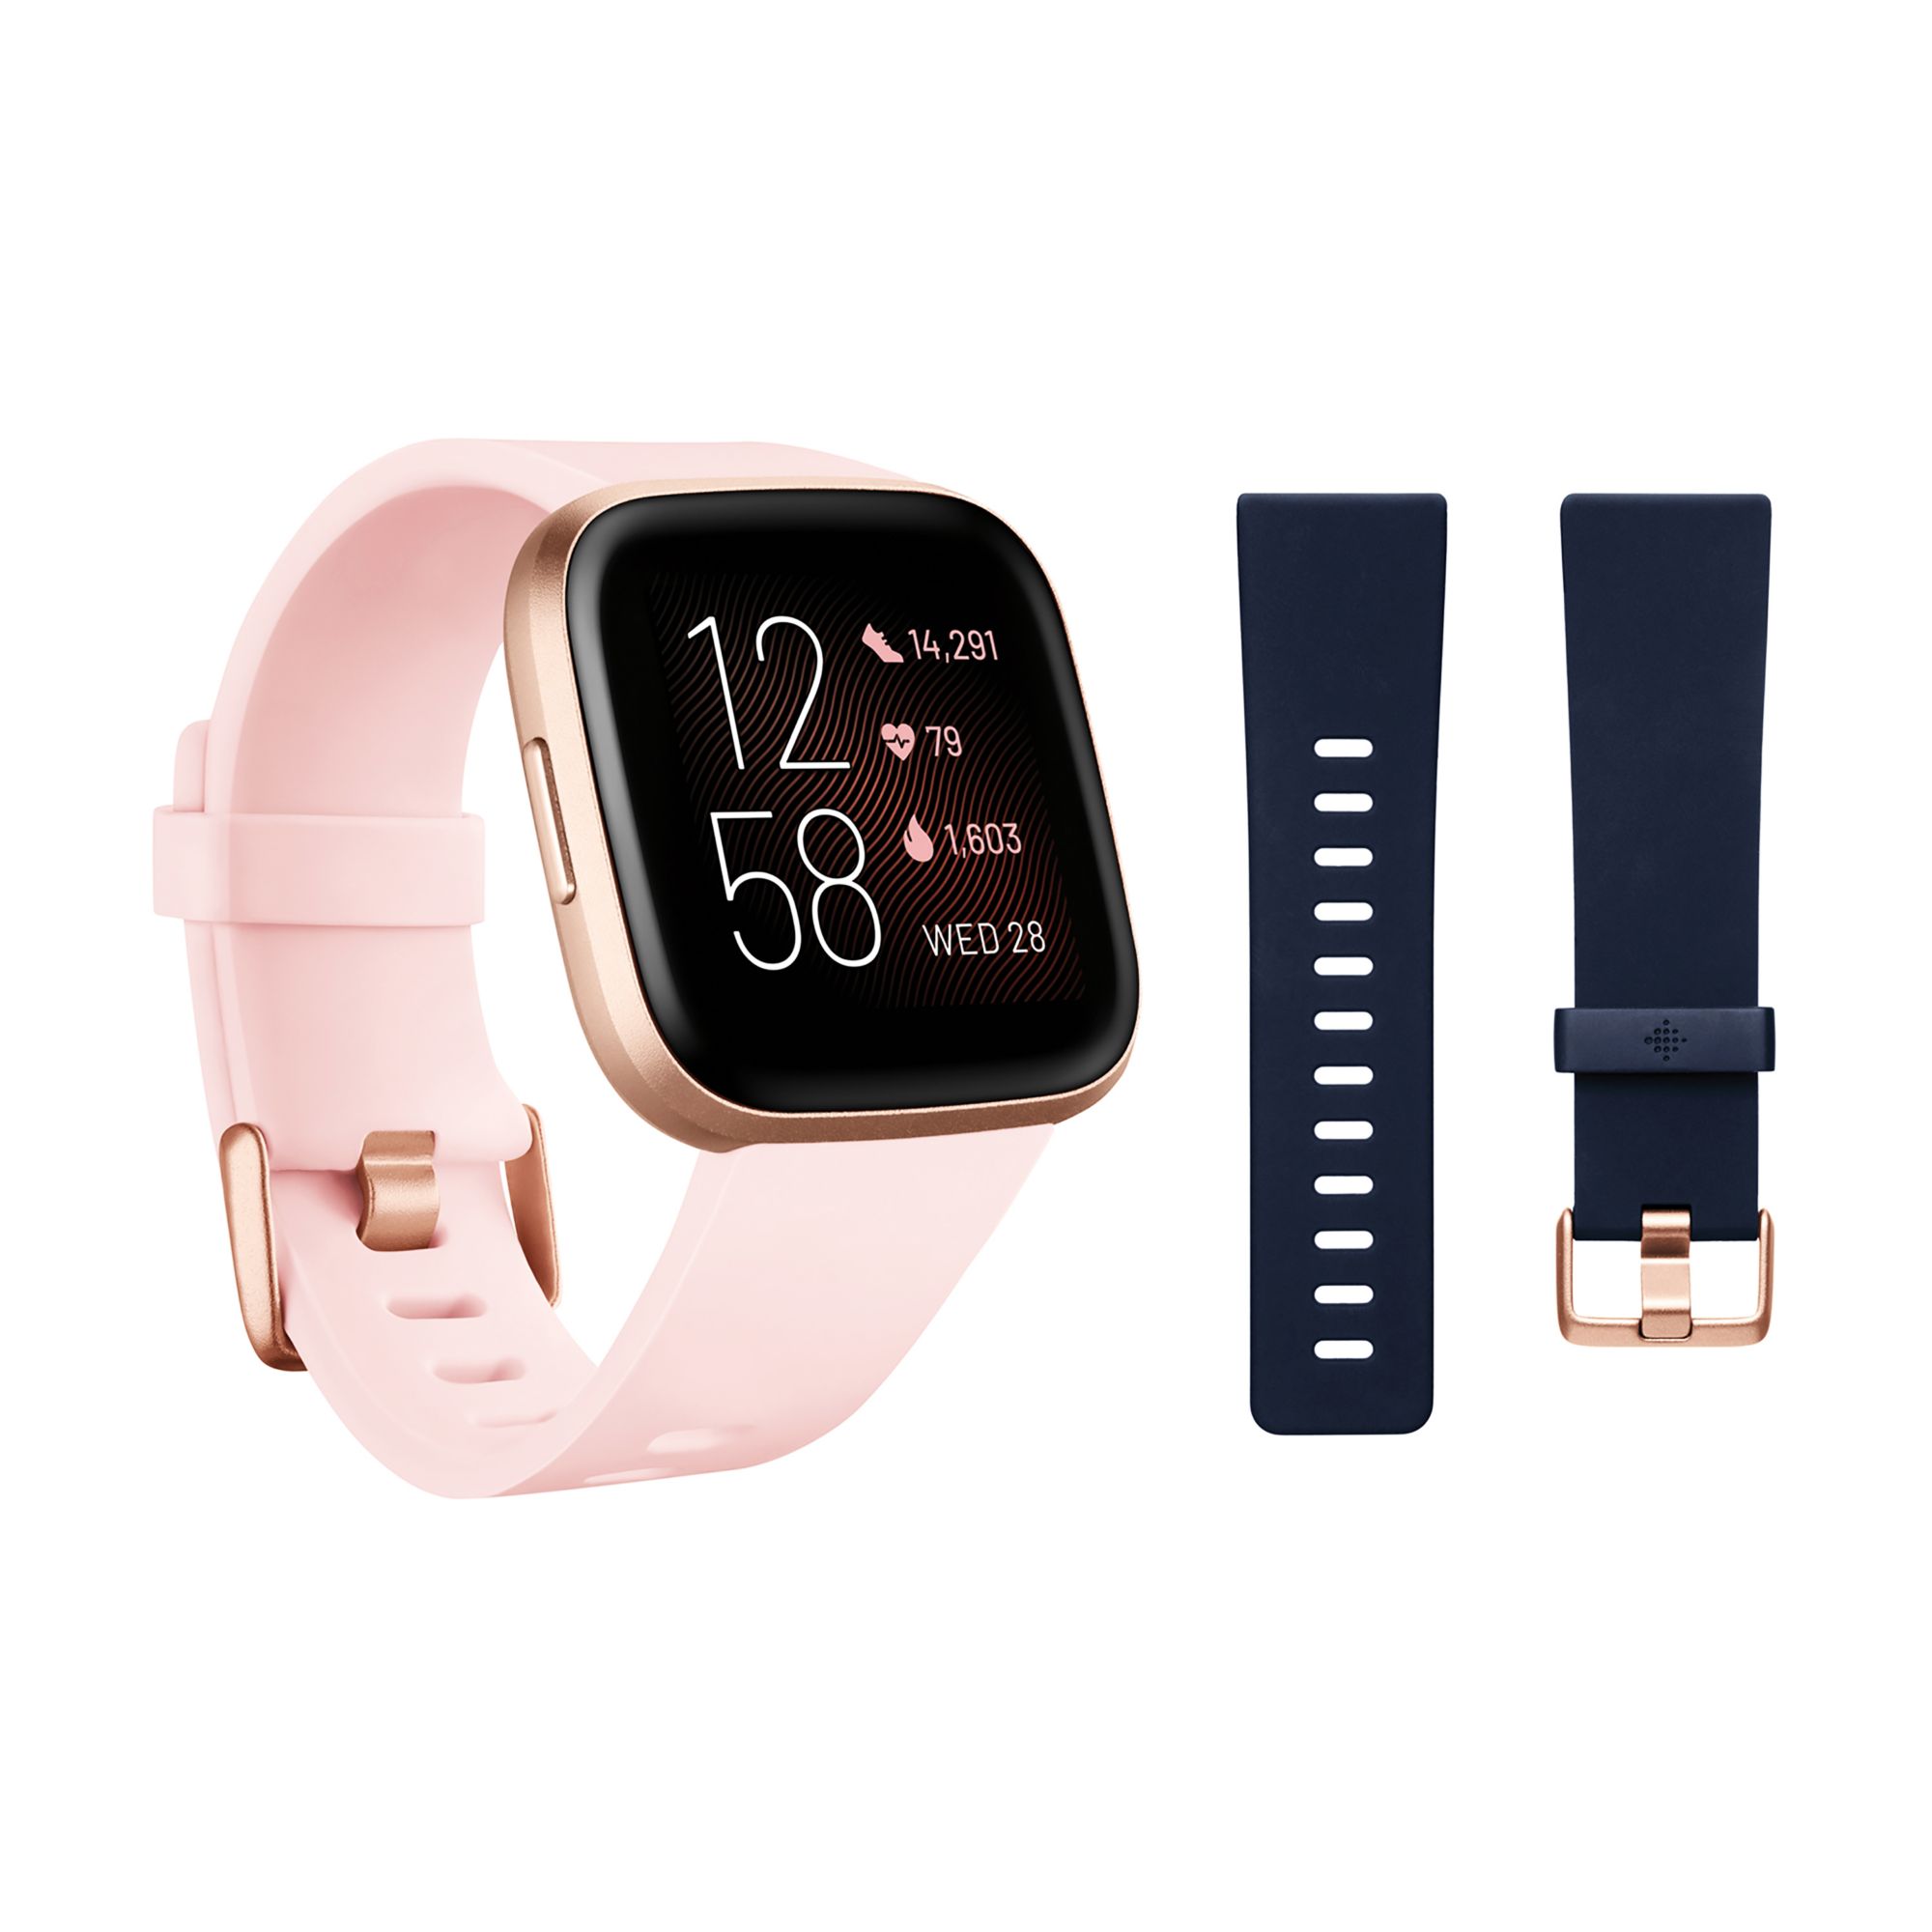 Fitbit Versa 2 Smartwatch Bundle with 